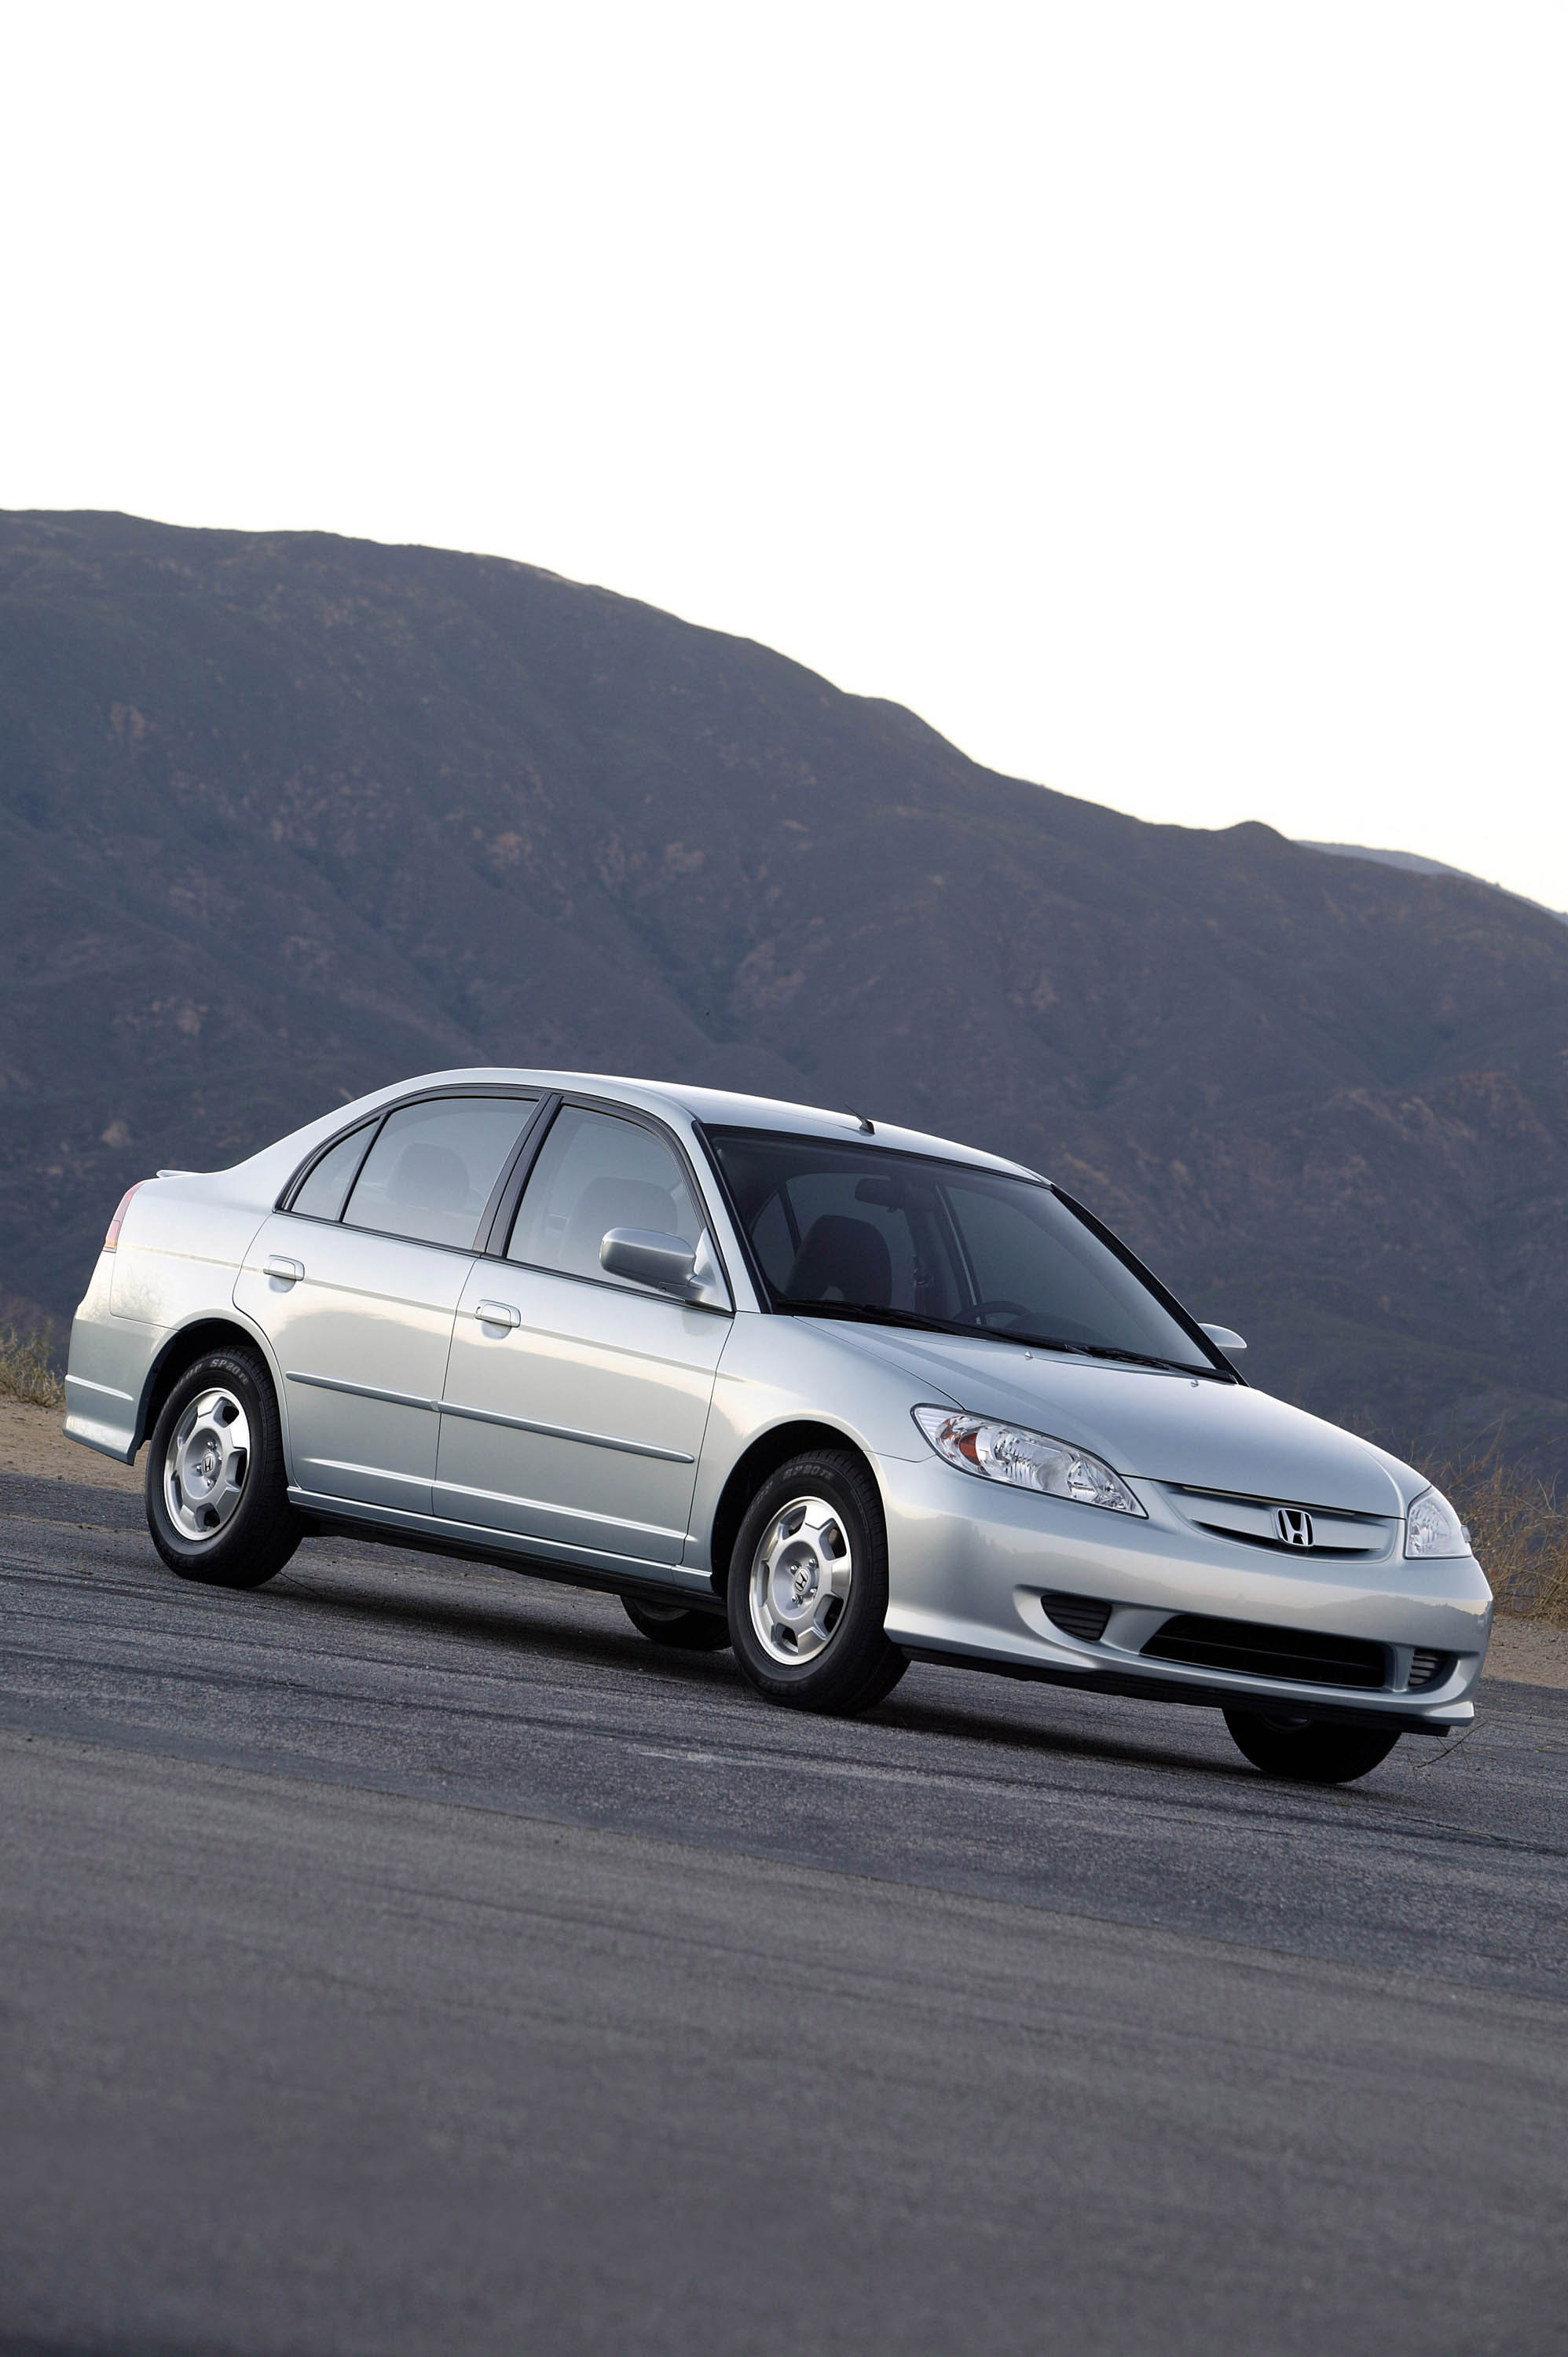 2005 Honda Civic Hybrid - HD Pictures @ carsinvasion.com